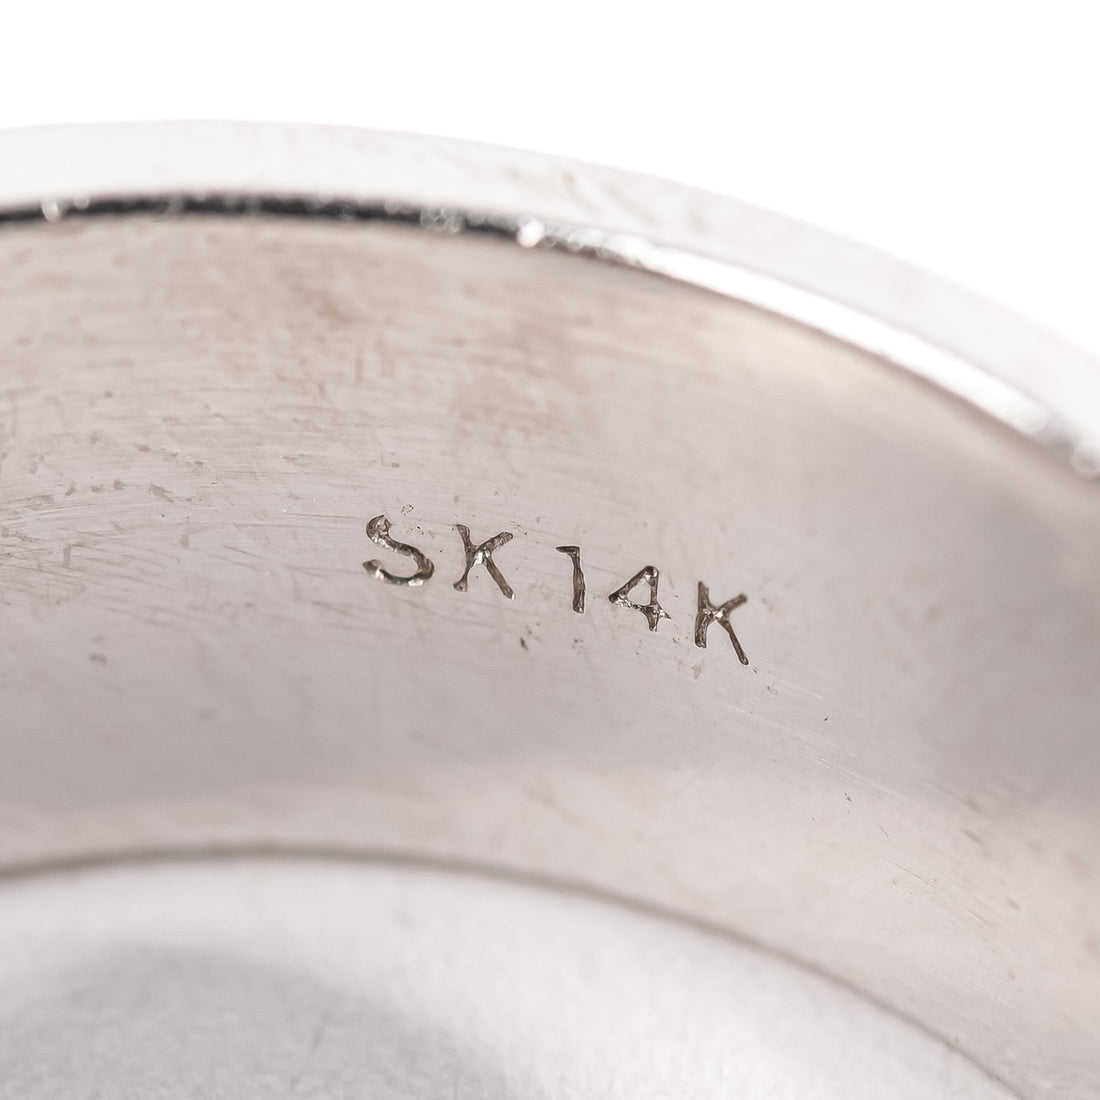 14K White Gold Pear Shaped Diamond Band Ring